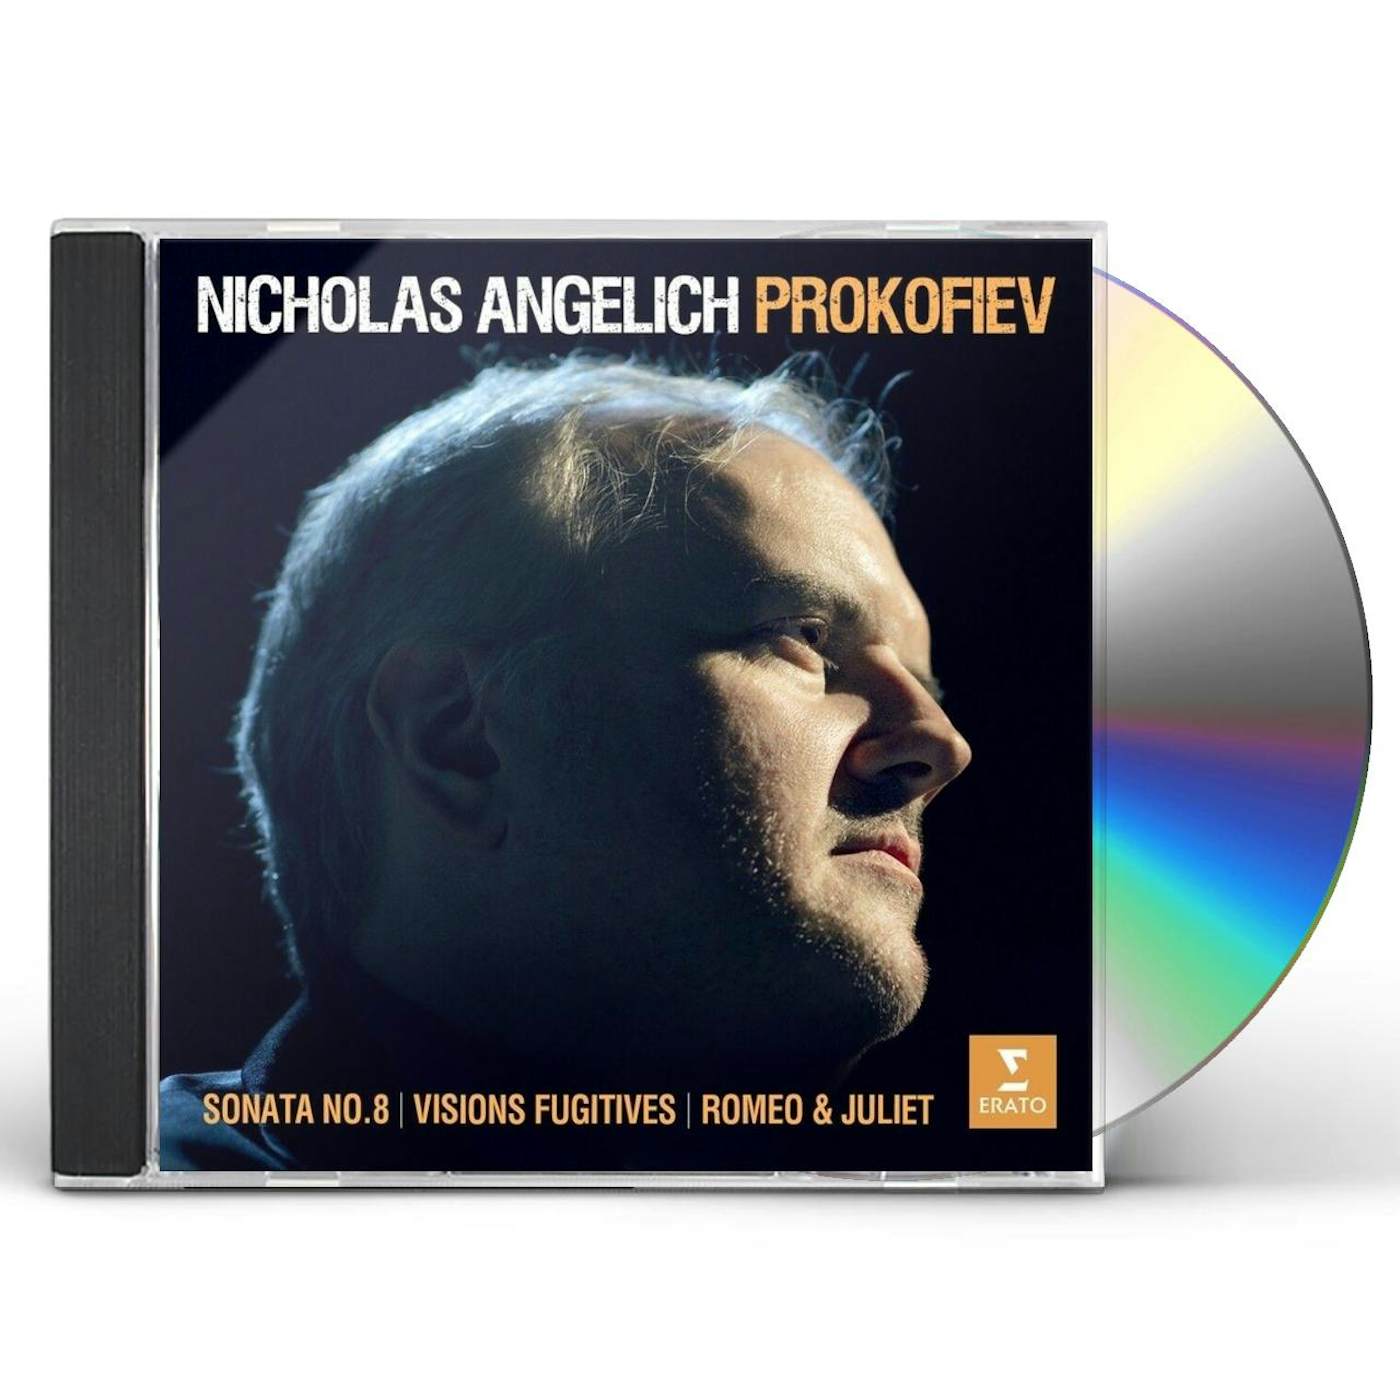 Nicholas Angelich PROKOFIEV CD